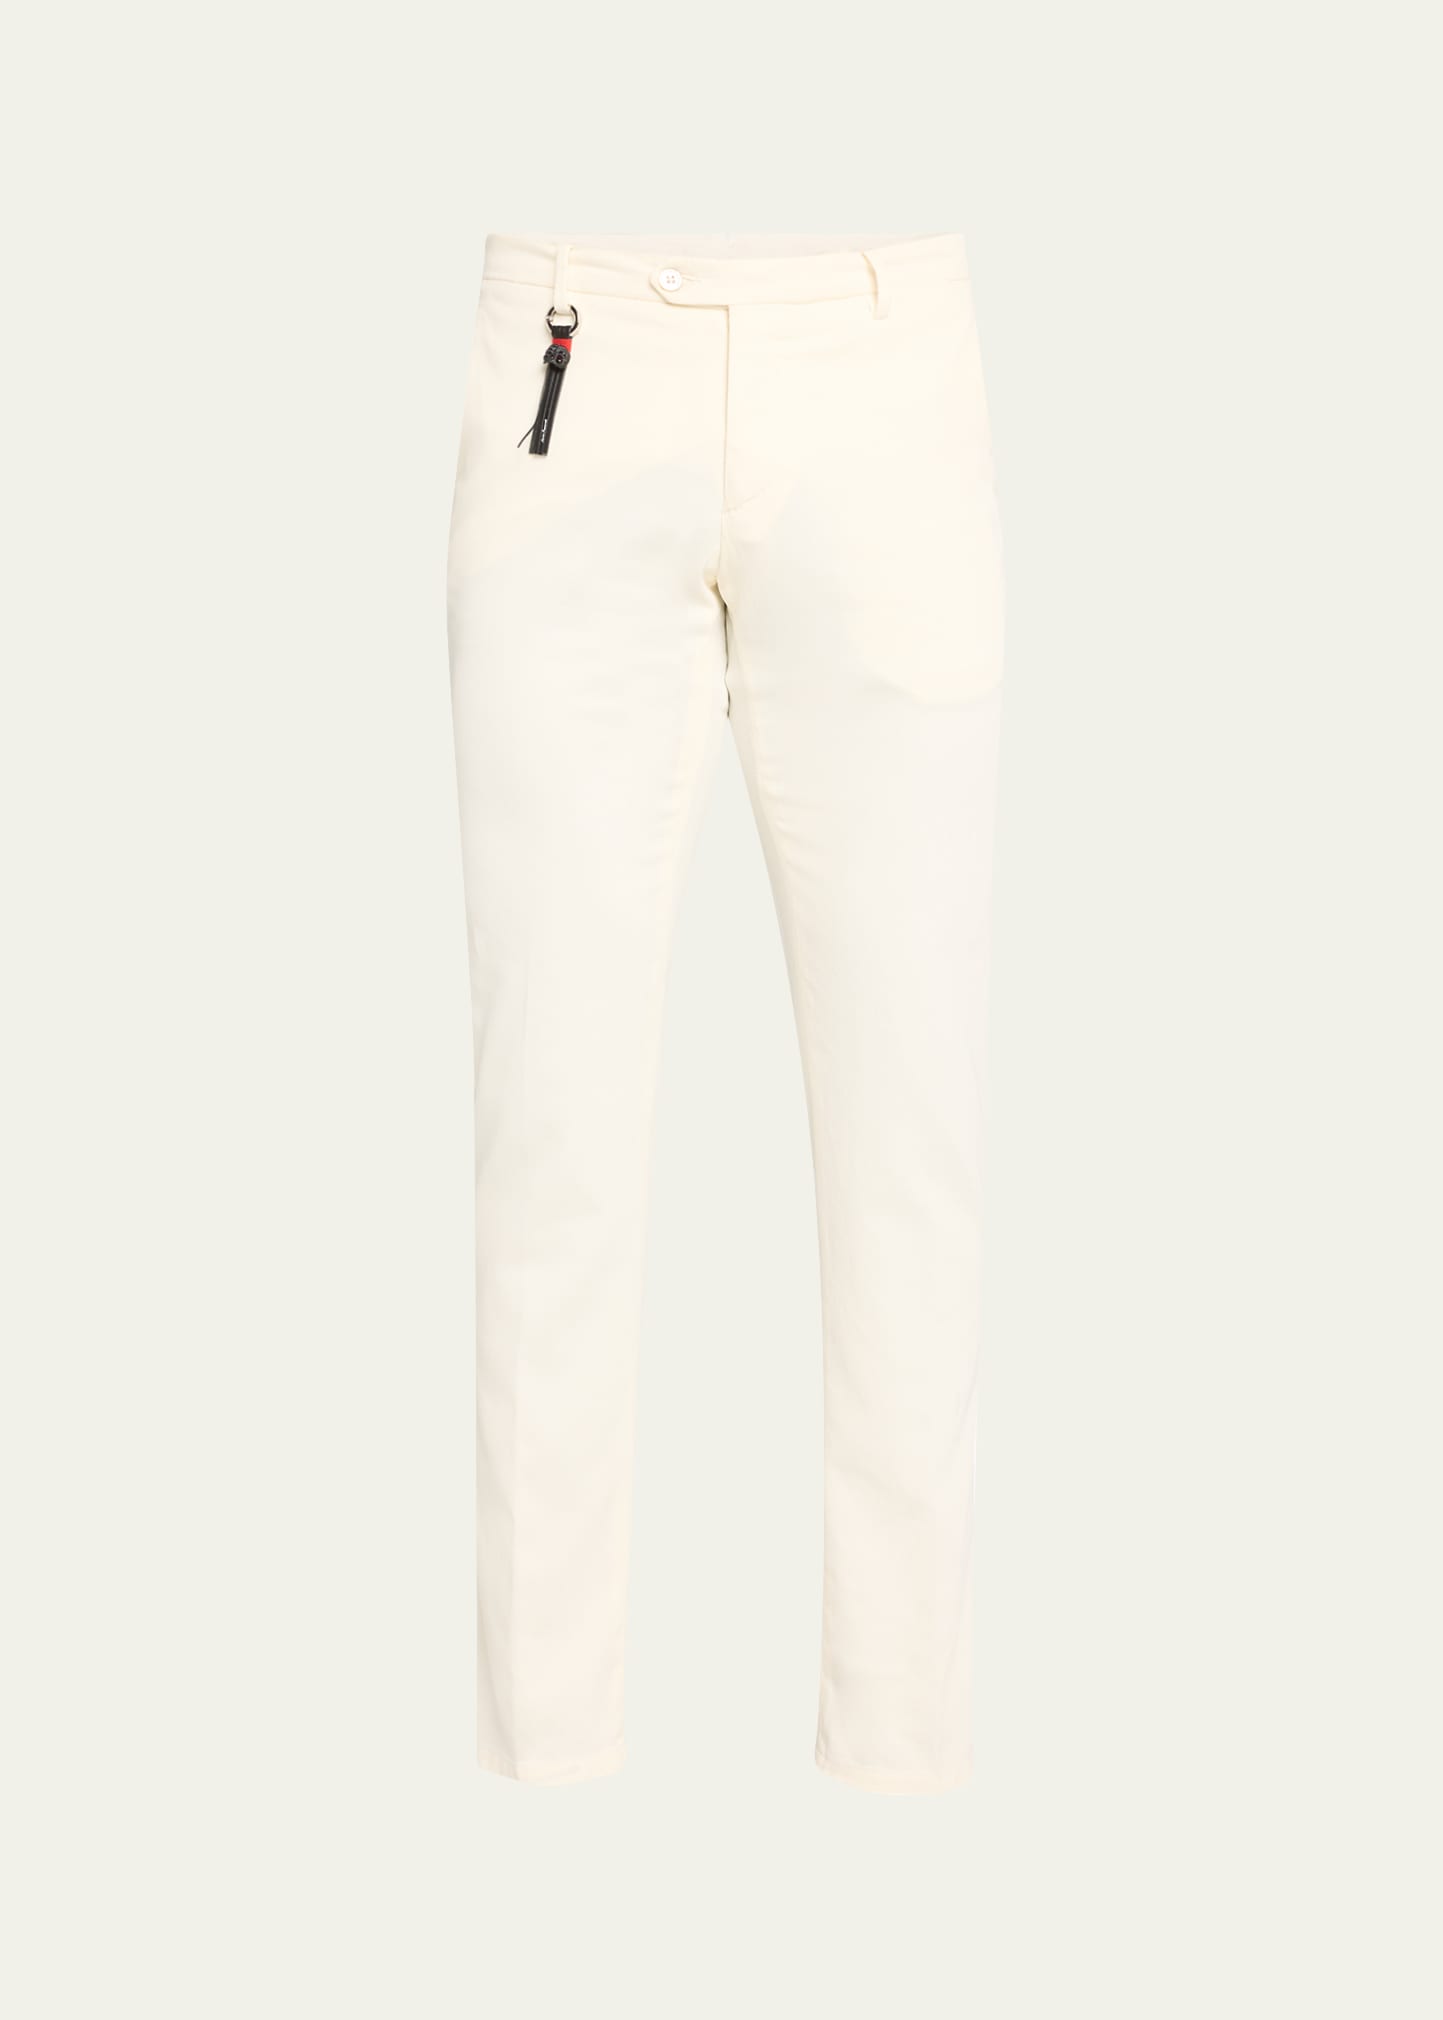 Marco Pescarolo Men's Luxe Twill Chino Pants In White